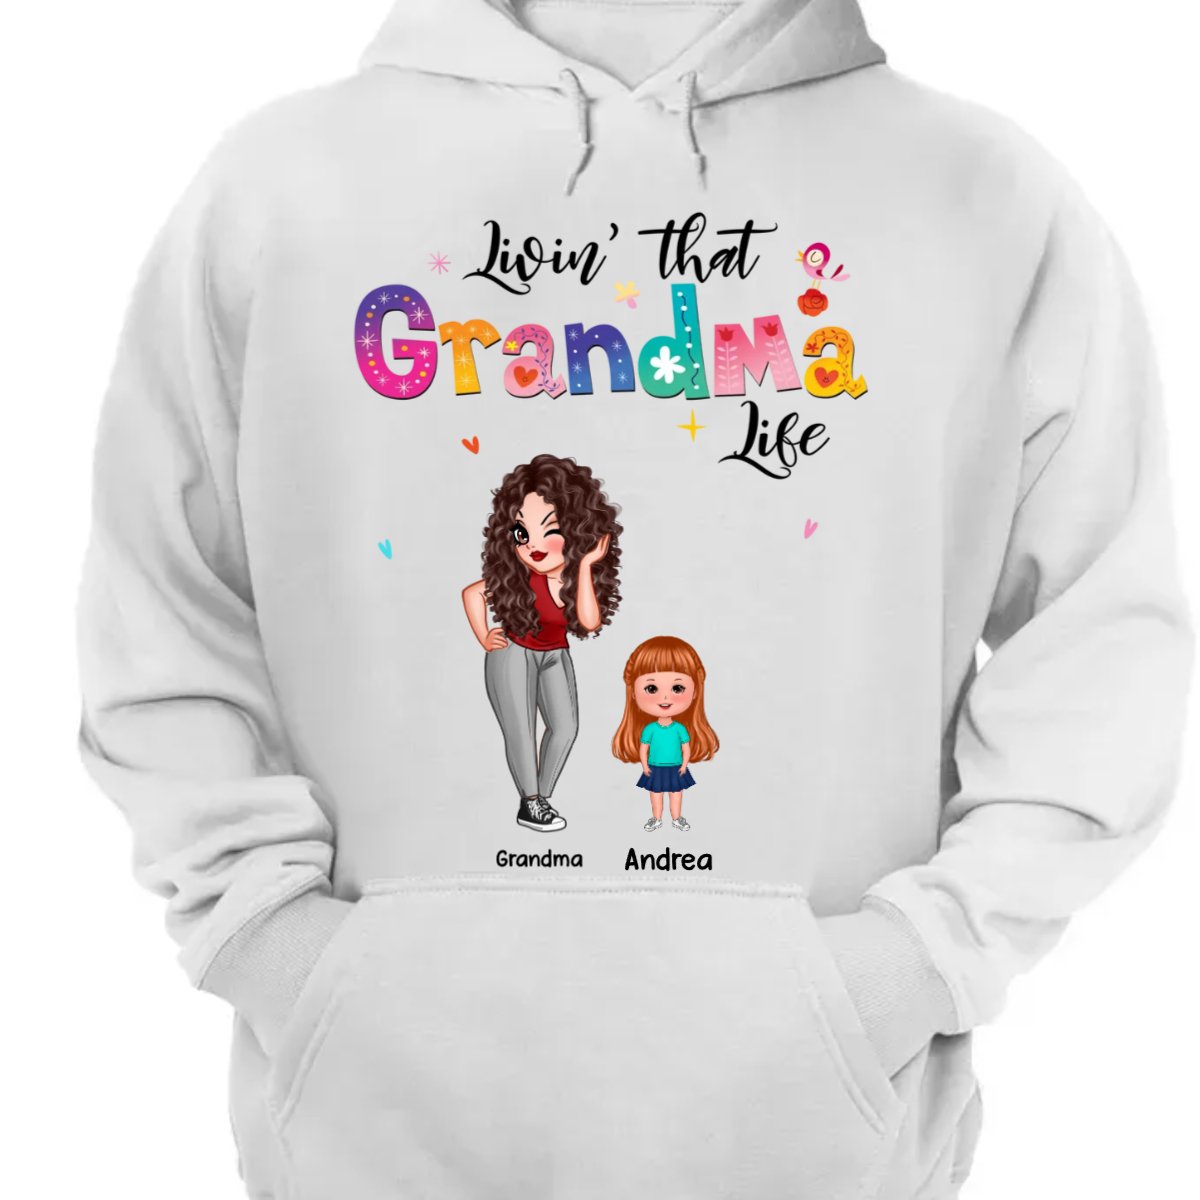 Family - Livin' That Grandma Life - Personalized Unisex Shirt - The Next Custom Gift